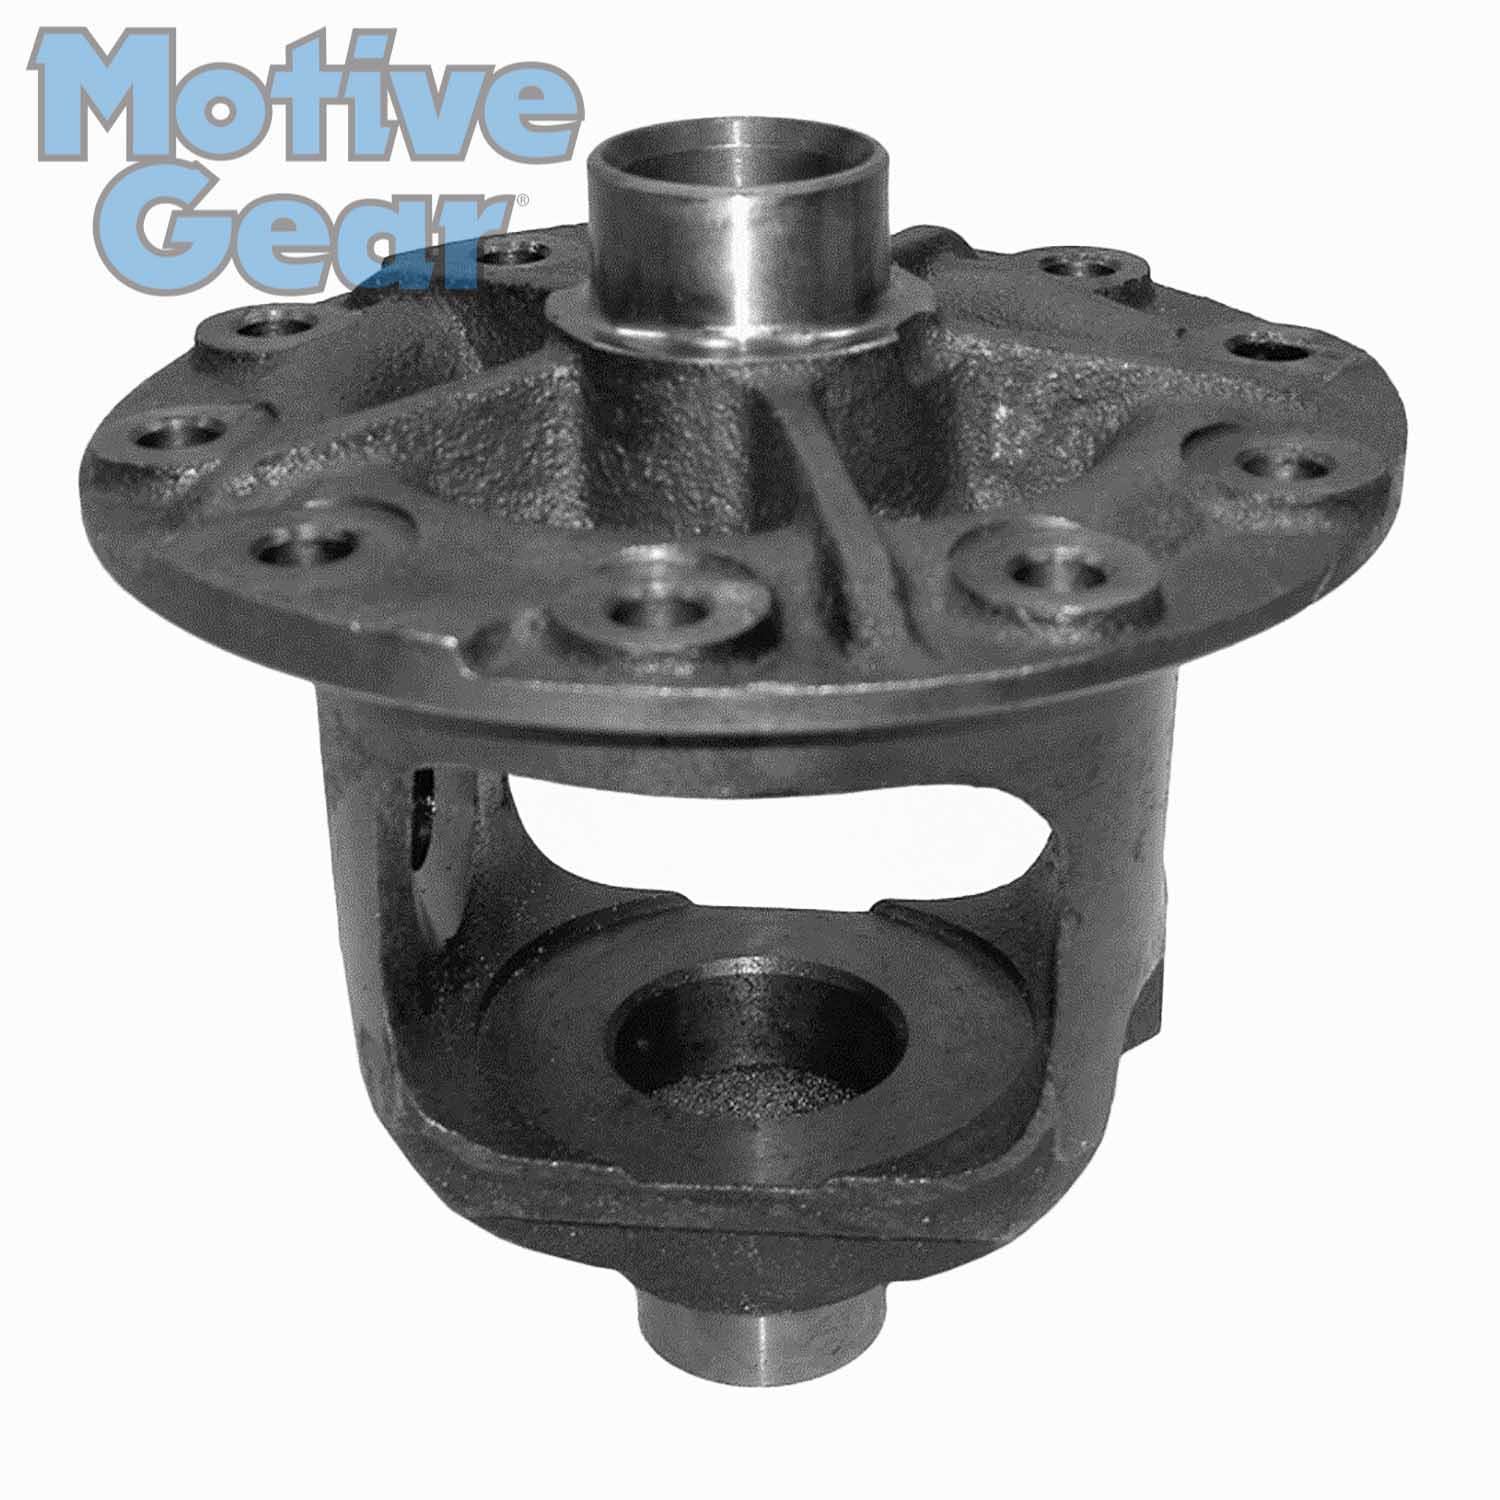 Motive Gear 26010481 OEC GM 8.5 inch 28 AND 30 SPL 2.73